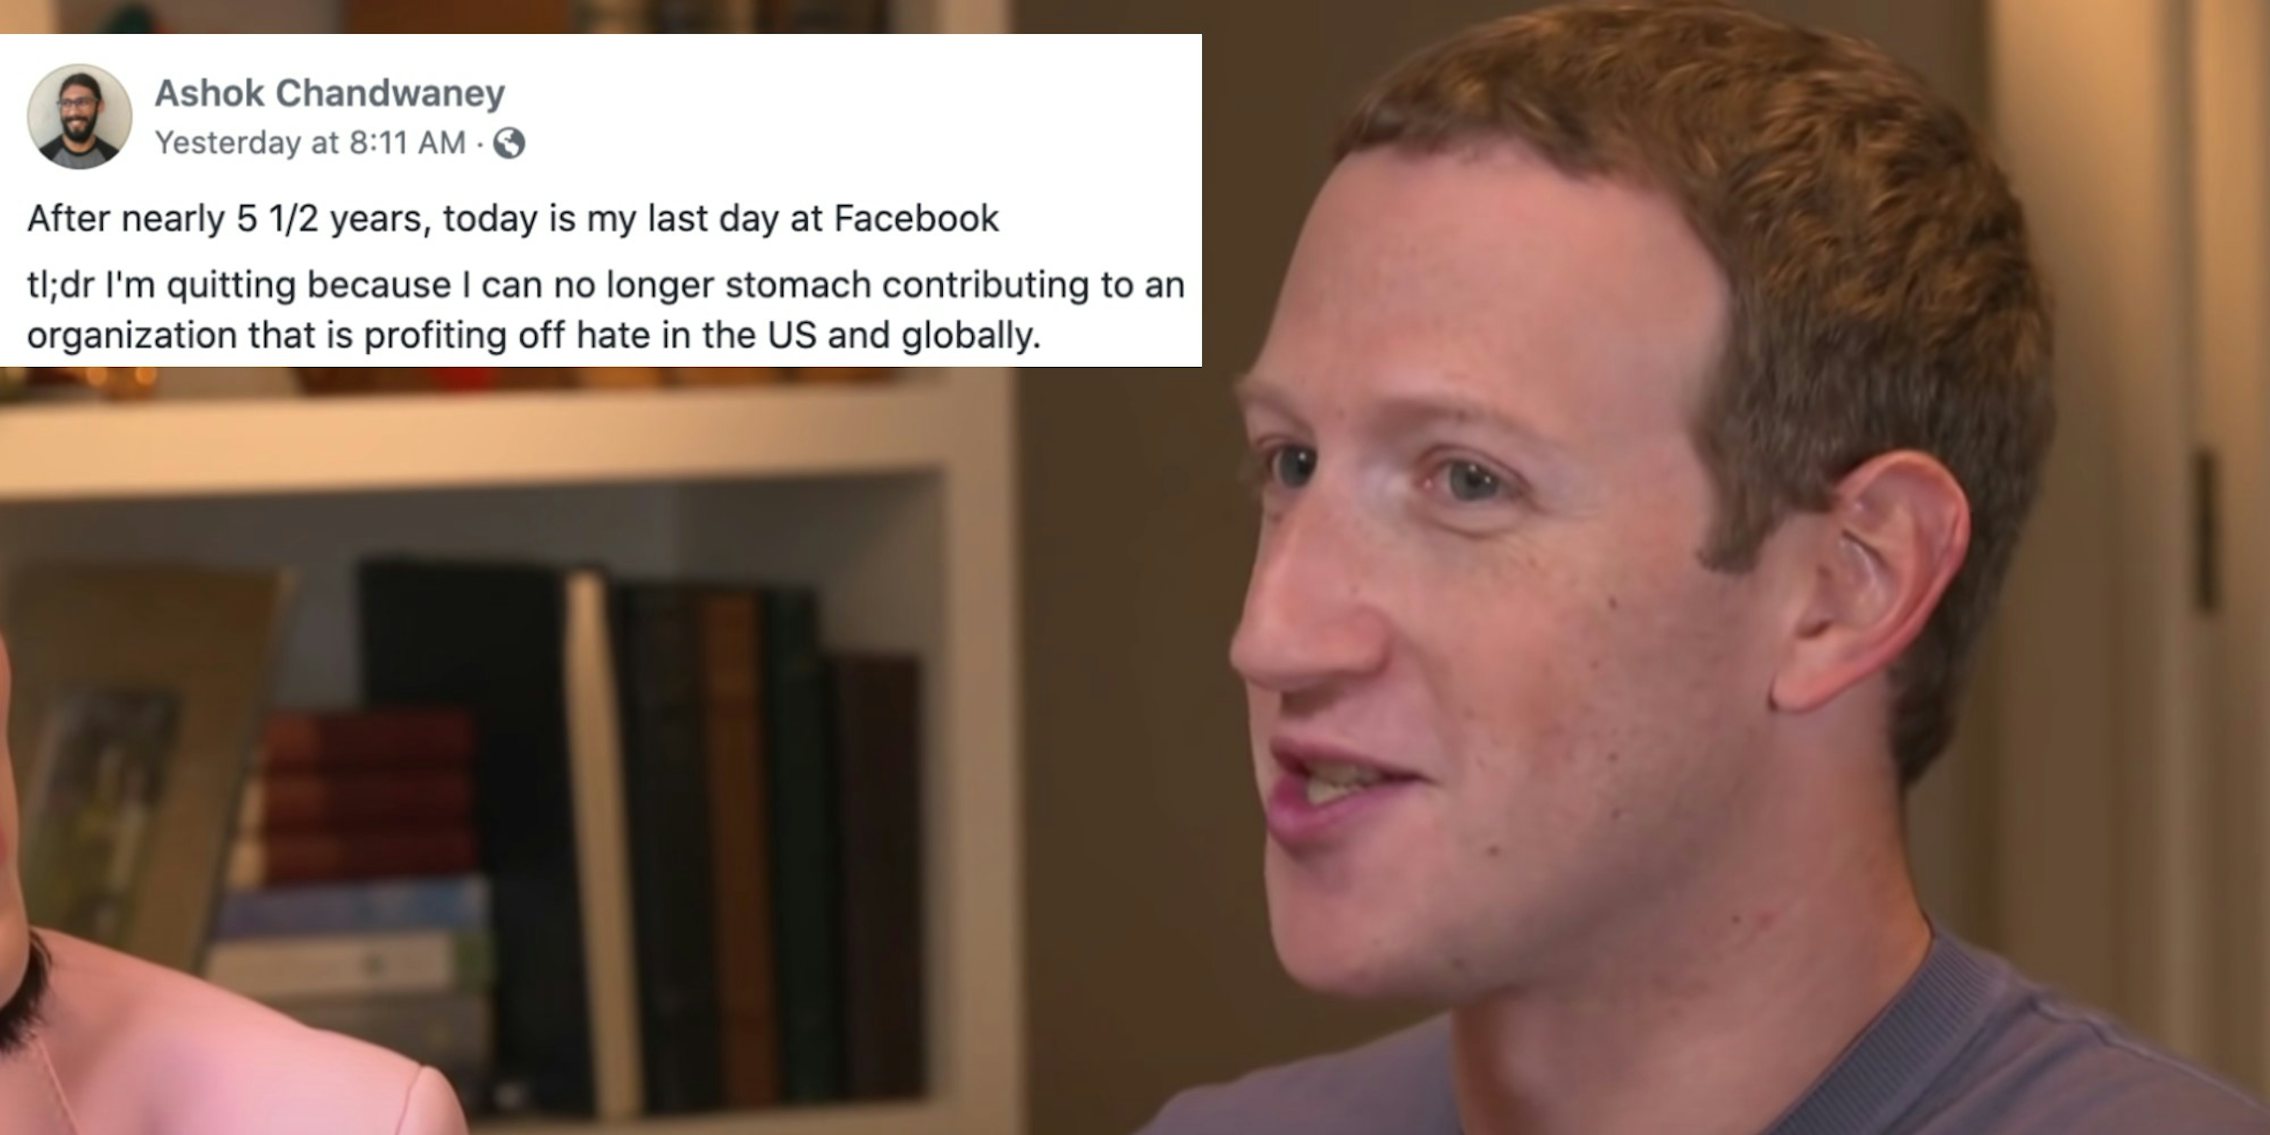 A Facebook employee quitting next to Mark Zuckerberg